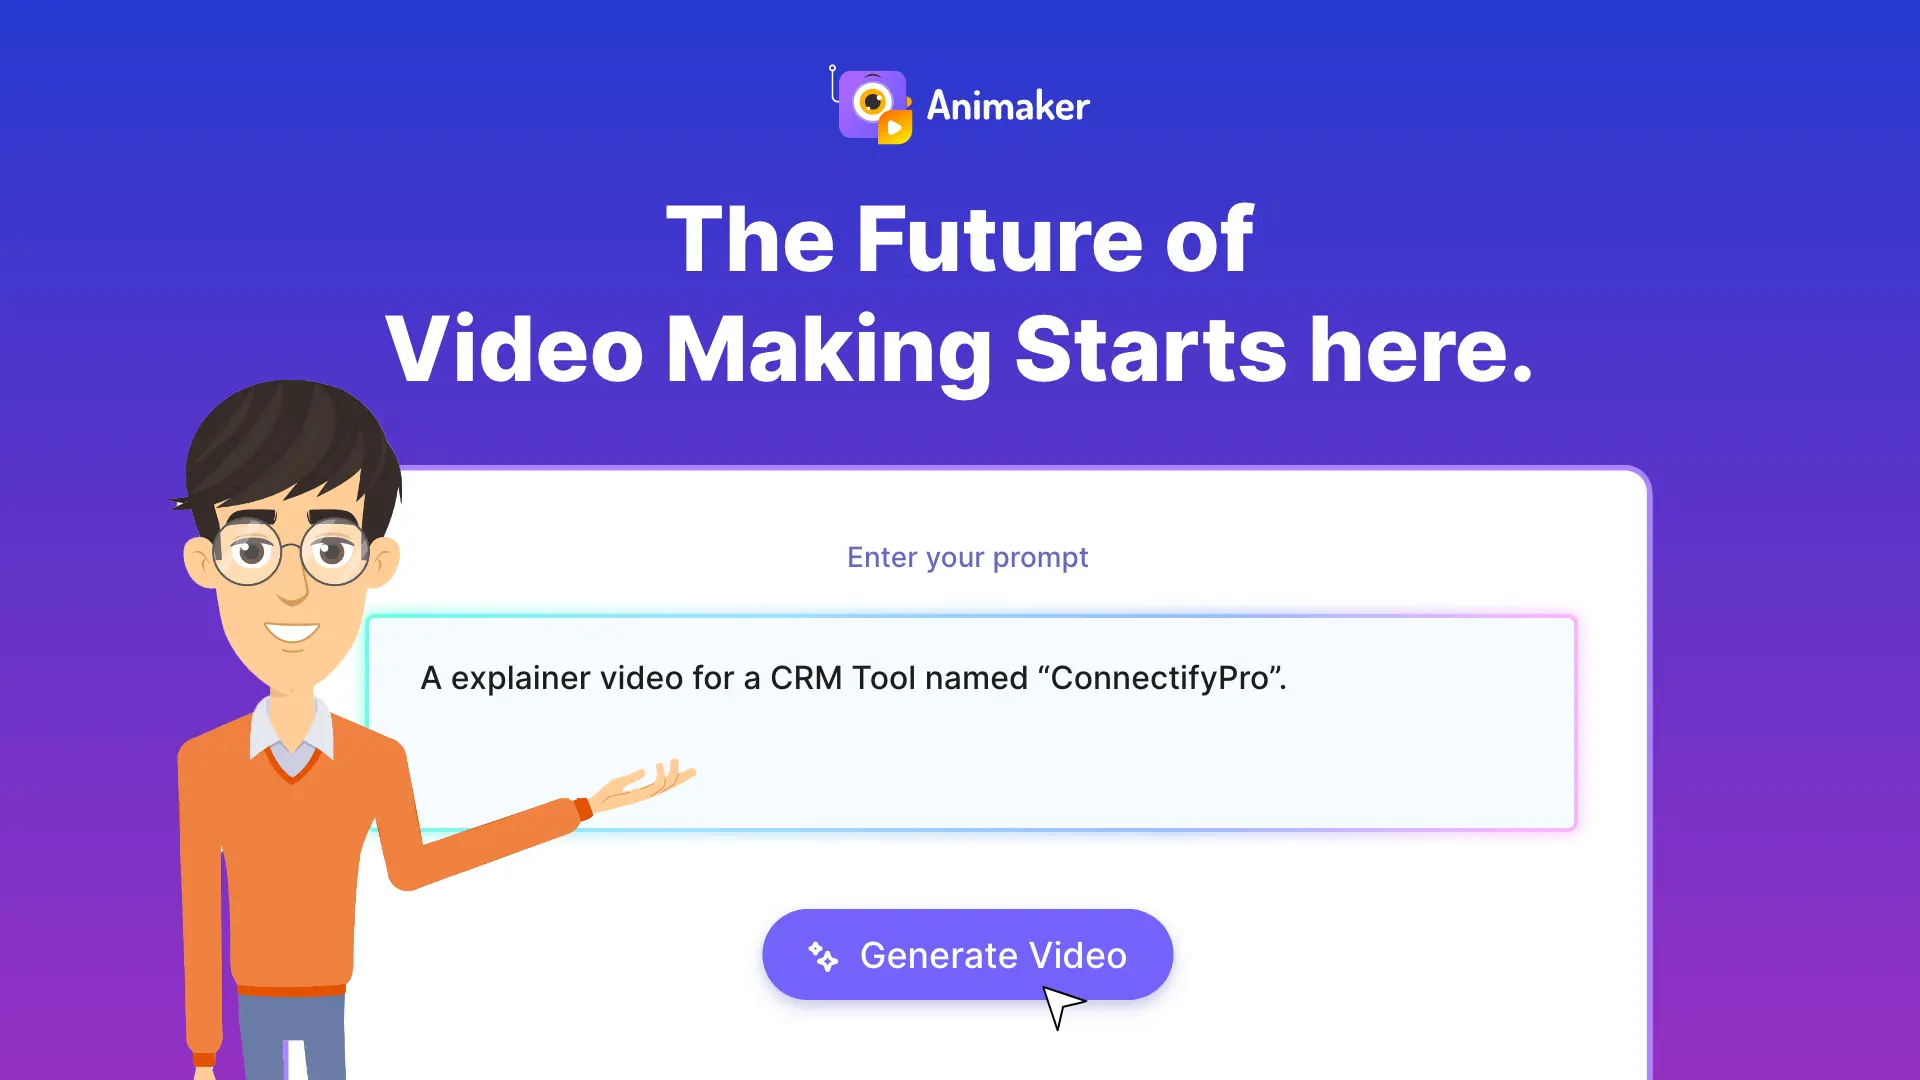 2023 Top 5 Video Intro Makers Offline and Online